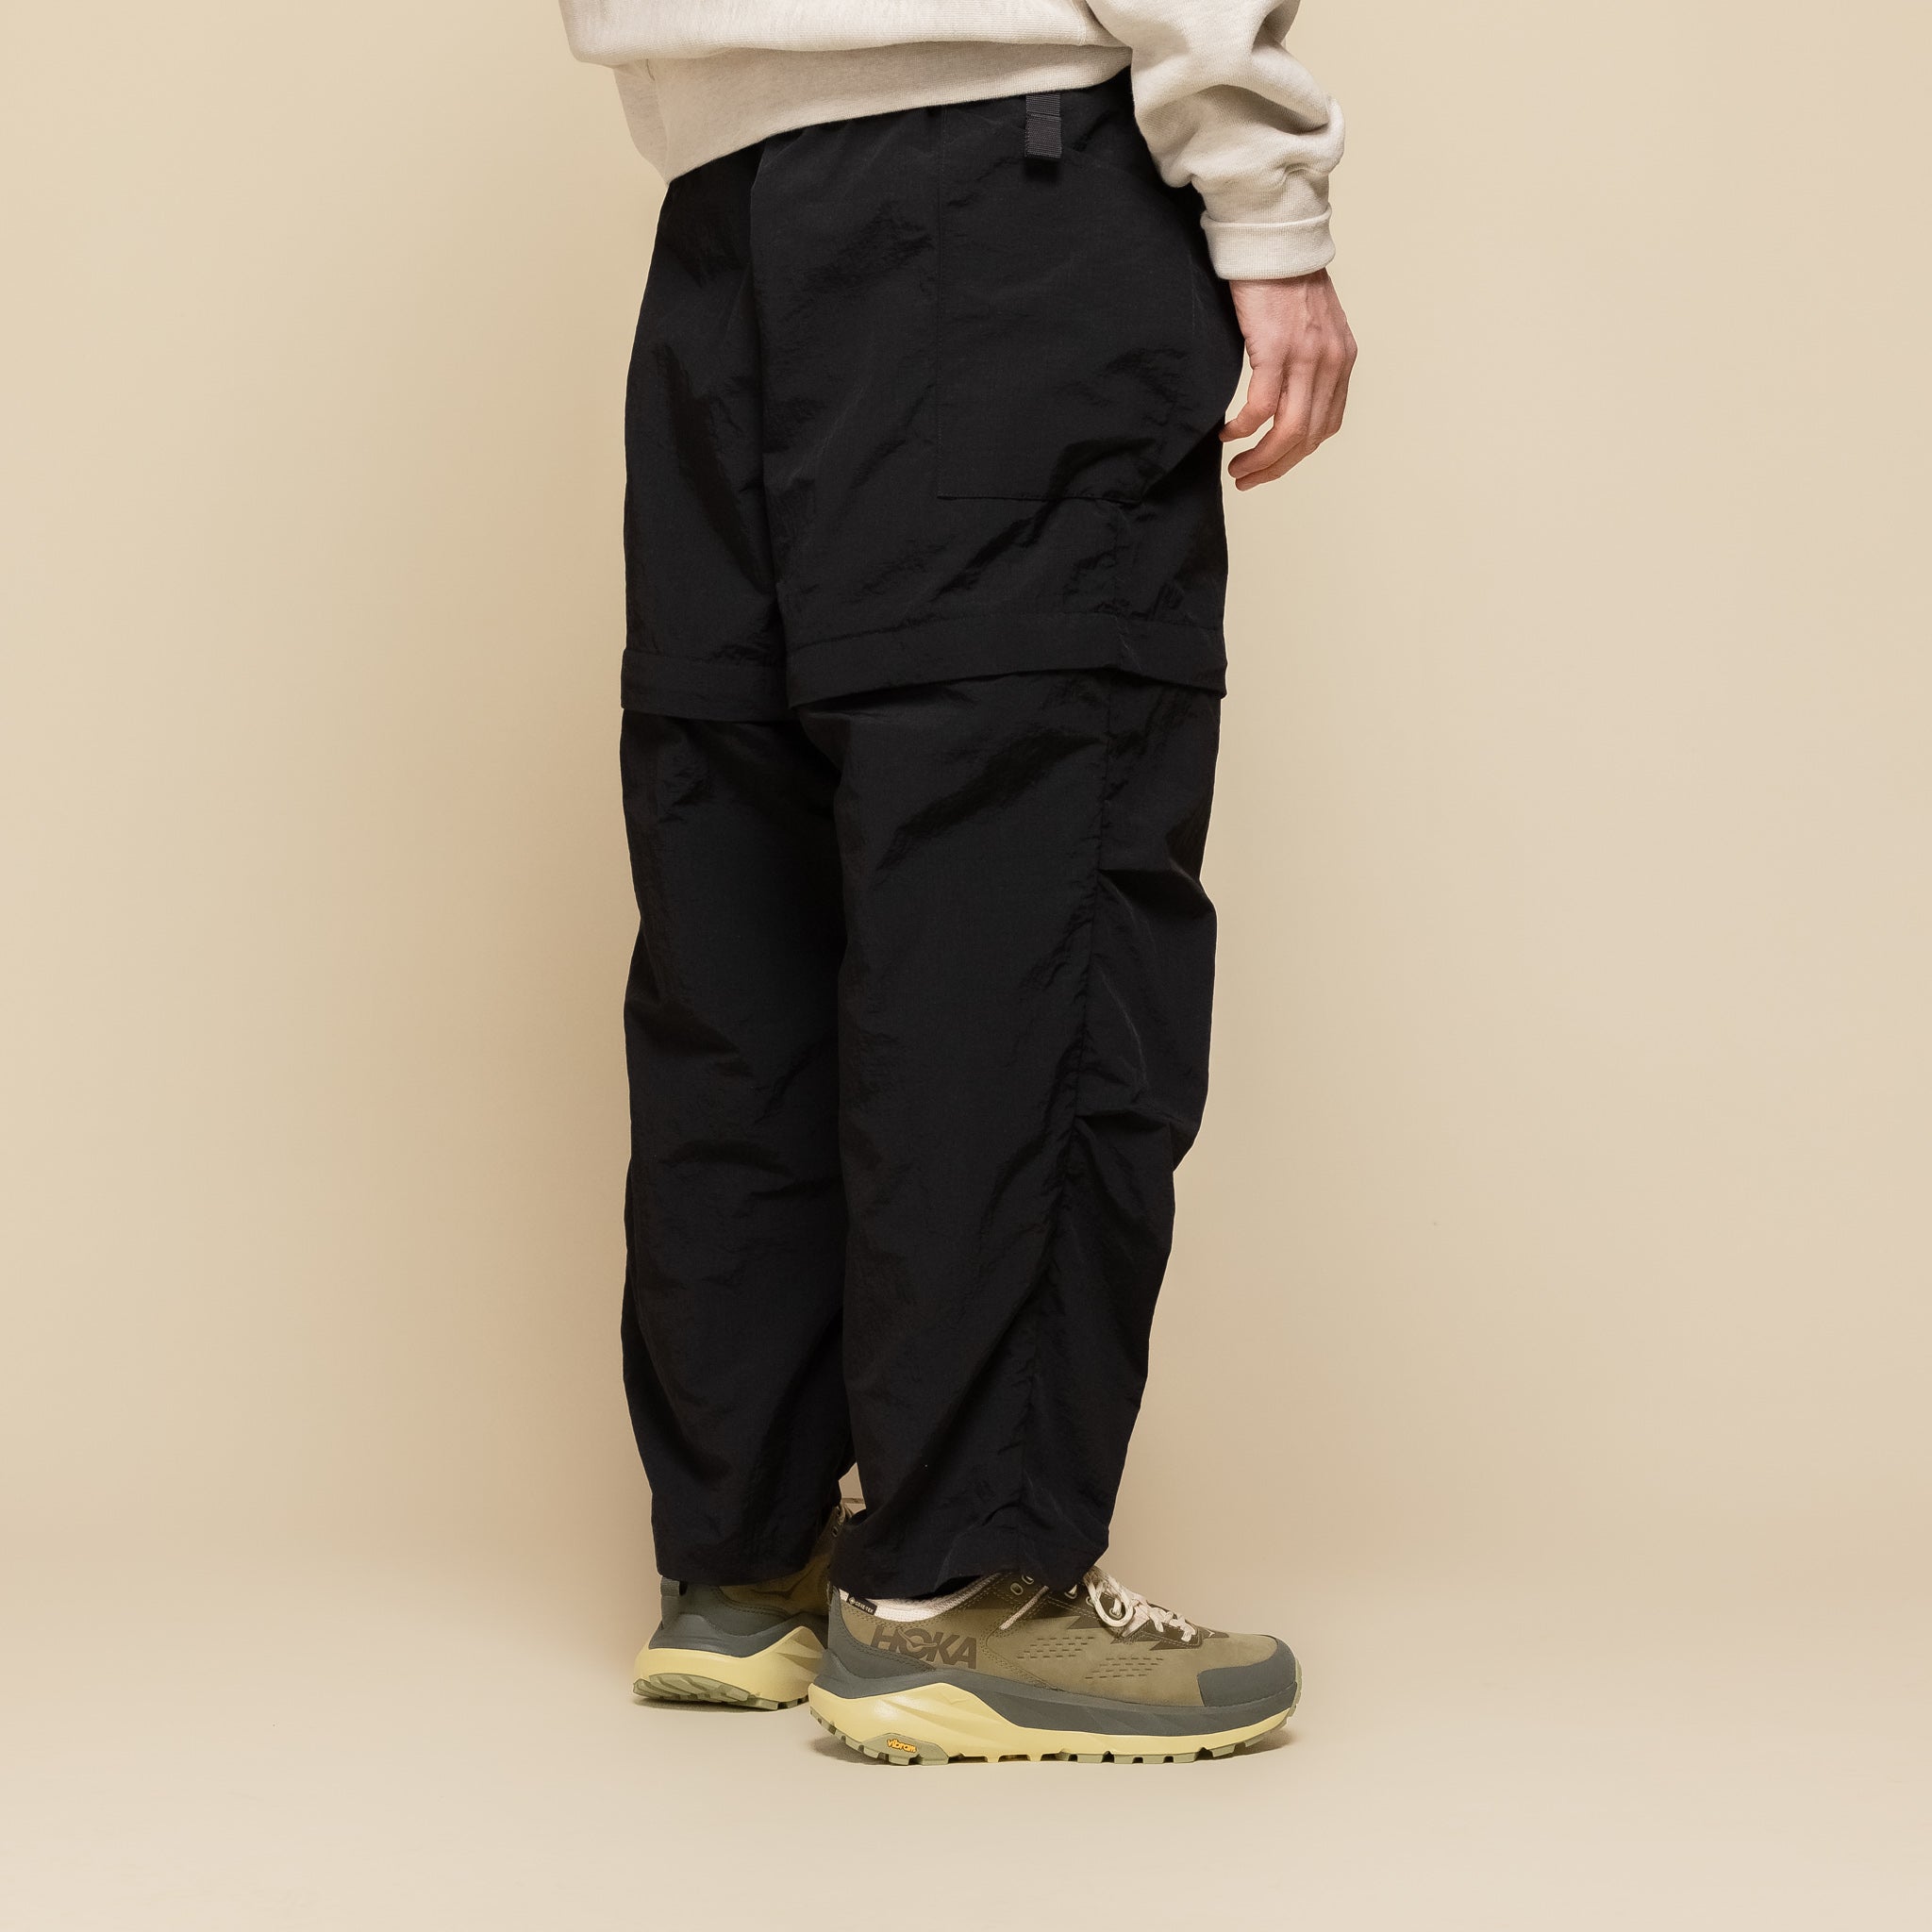 CMF Comfy Outdoor Garment - M65 Detachable "2 Way" Pants - Black